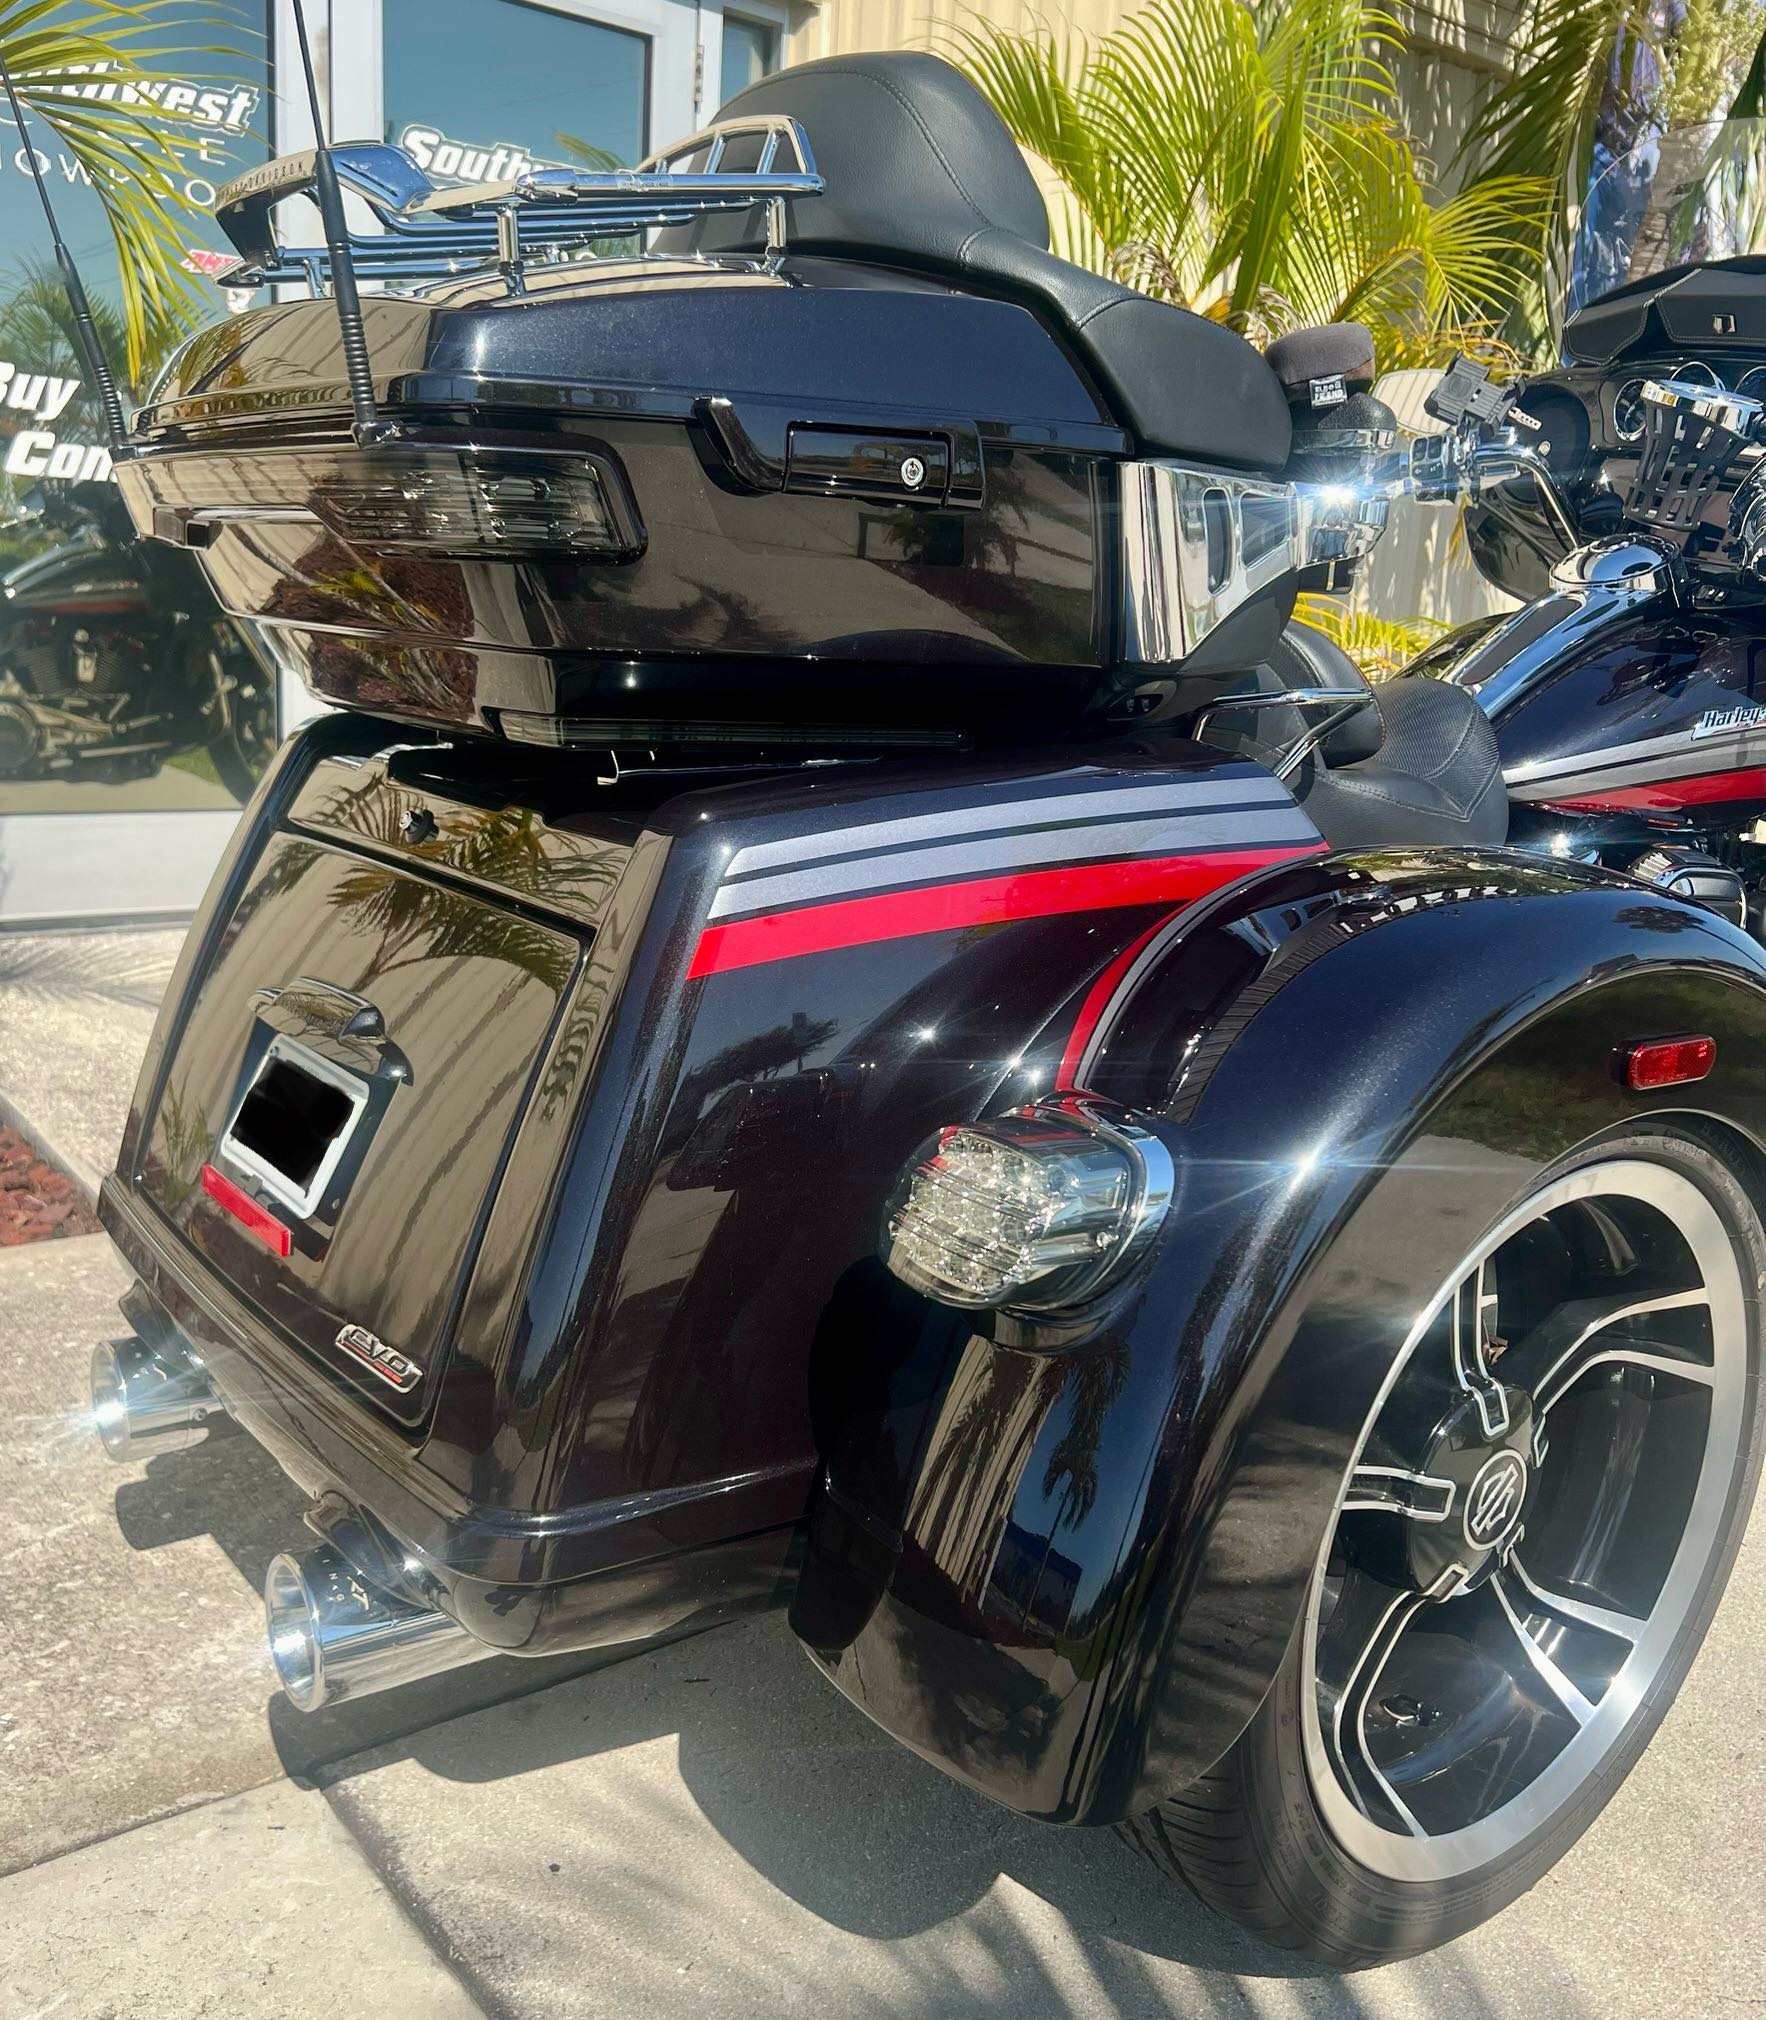 2020 Harley-Davidson CVO CVO Tri Glide at Southwest Cycle, Cape Coral, FL 33909